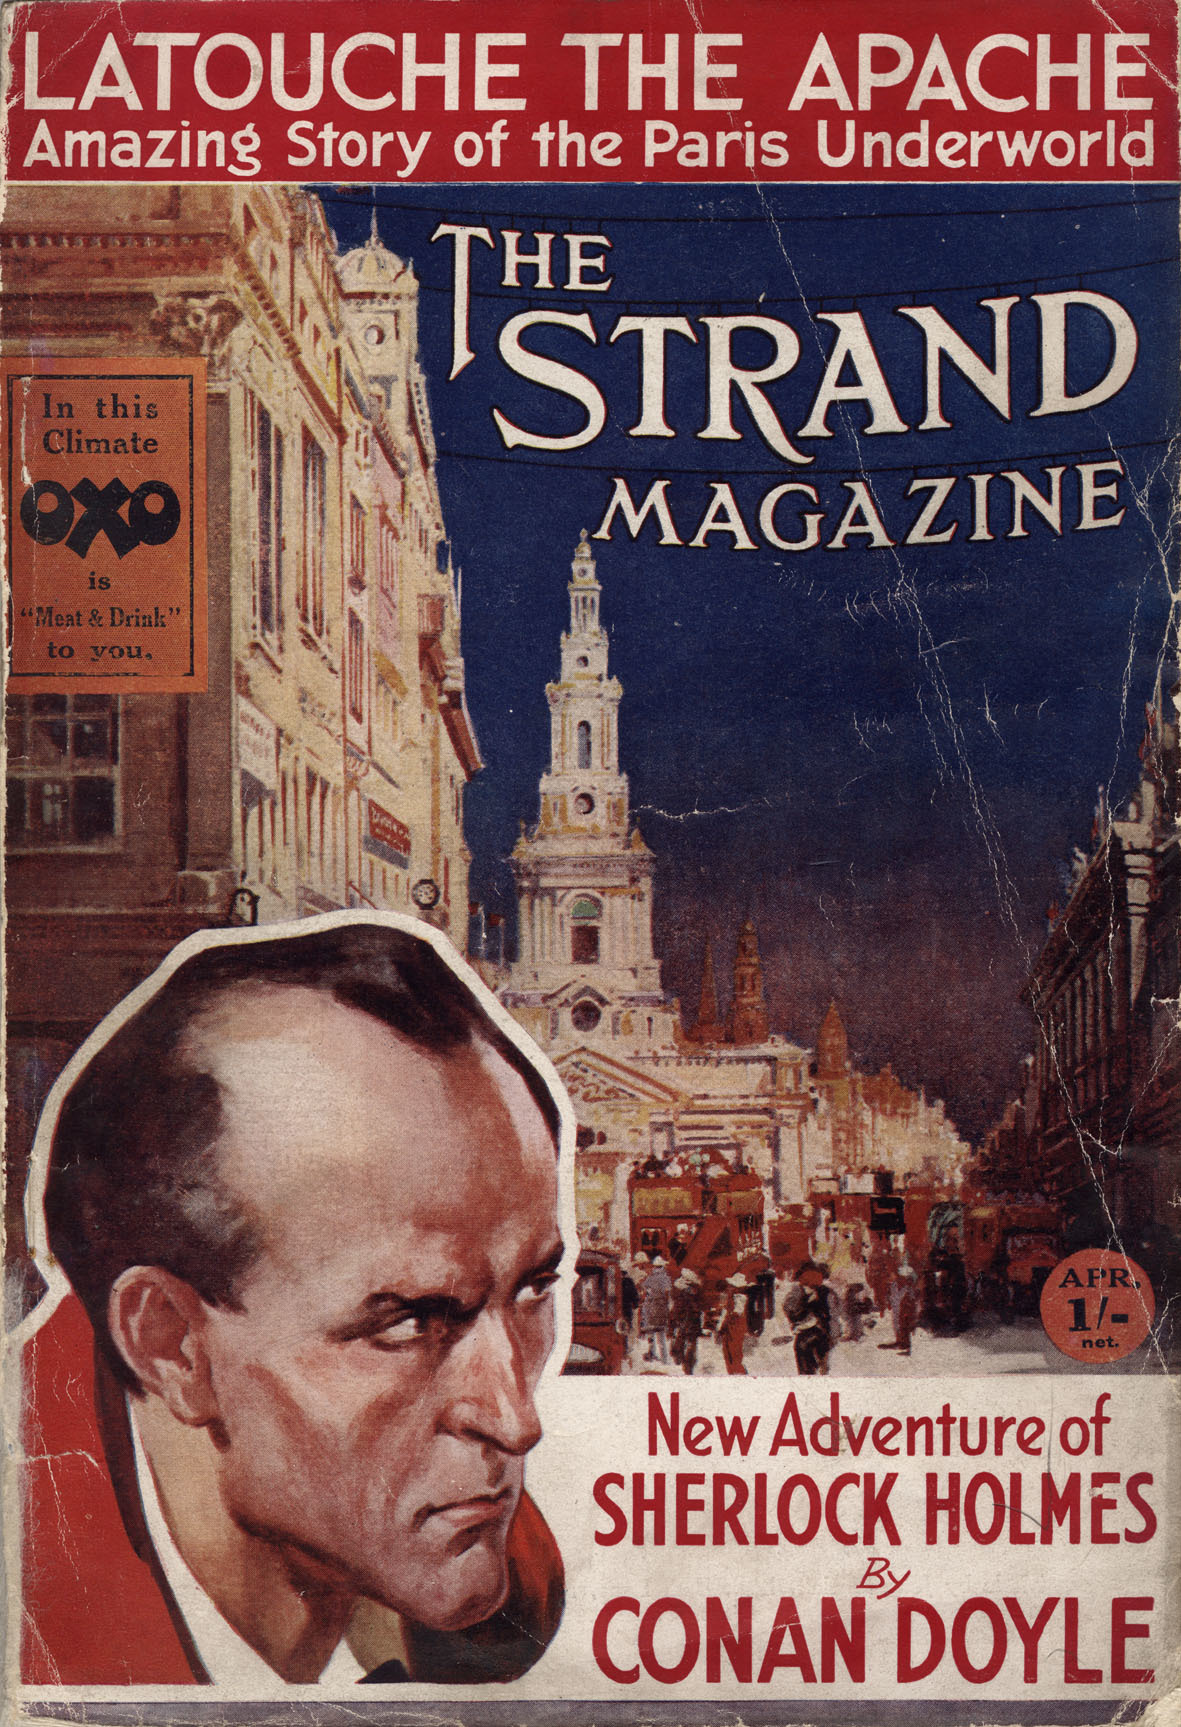 Sherlock Holmes in the Strand Magazine